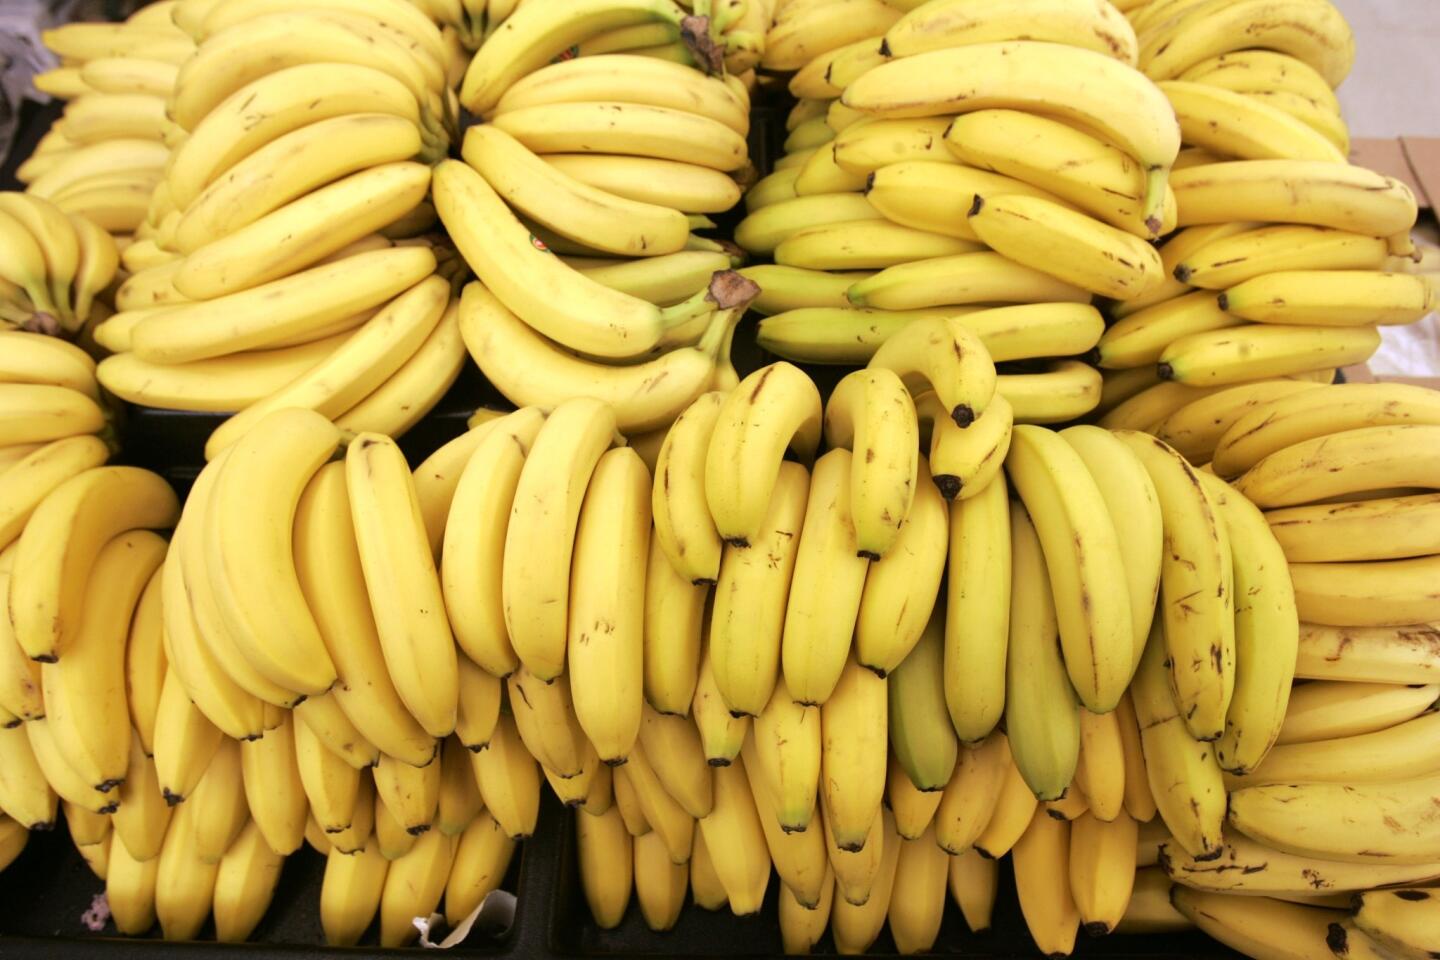 30,000 pounds of bananas